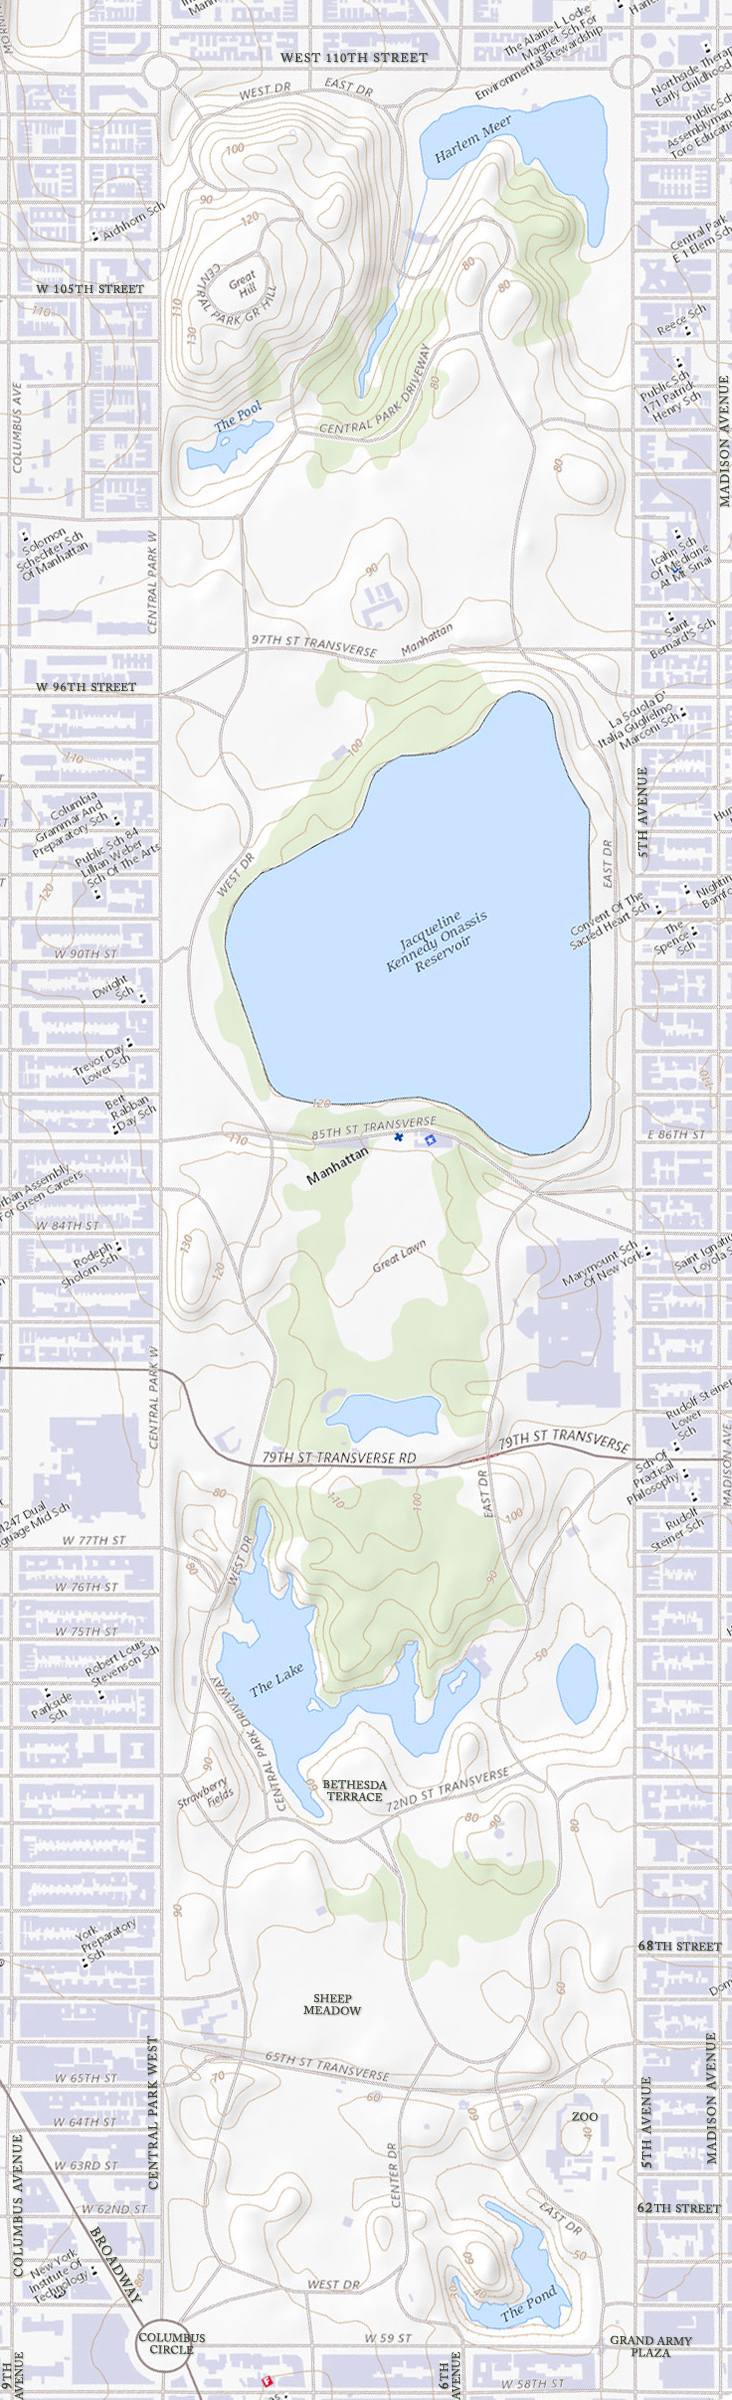 Central Park map